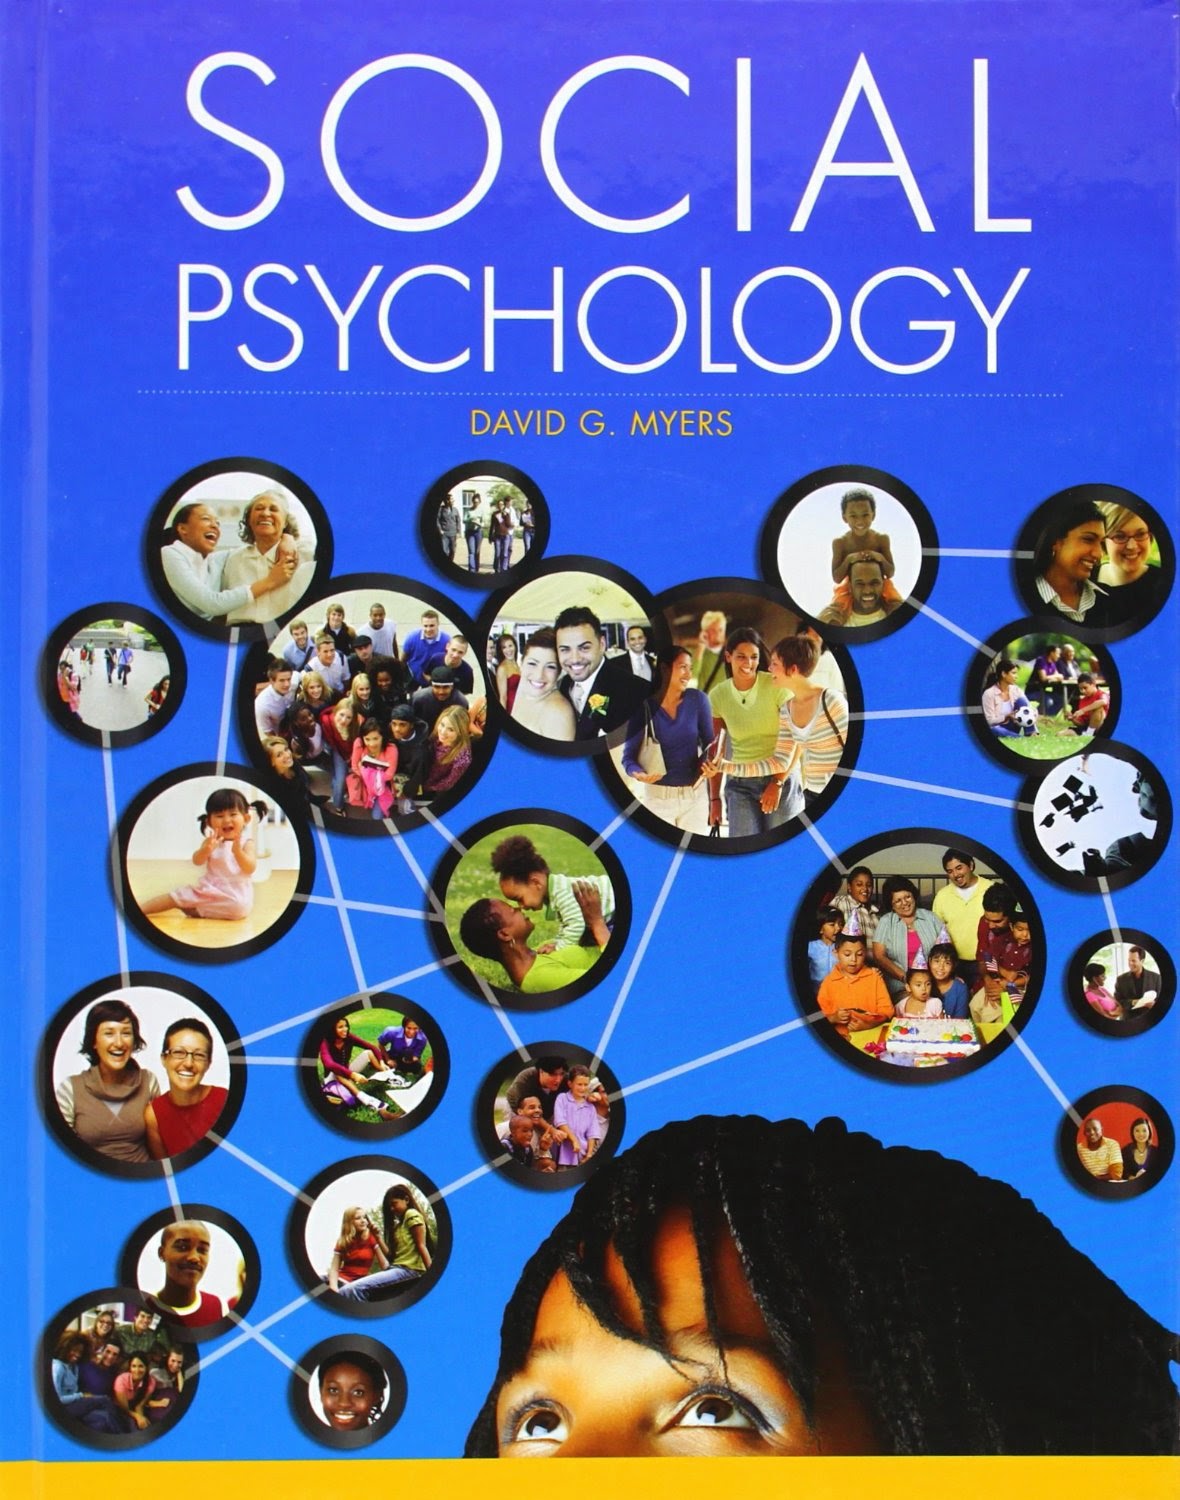 http://kingcheapebook.blogspot.com/2014/07/social-psychology.html